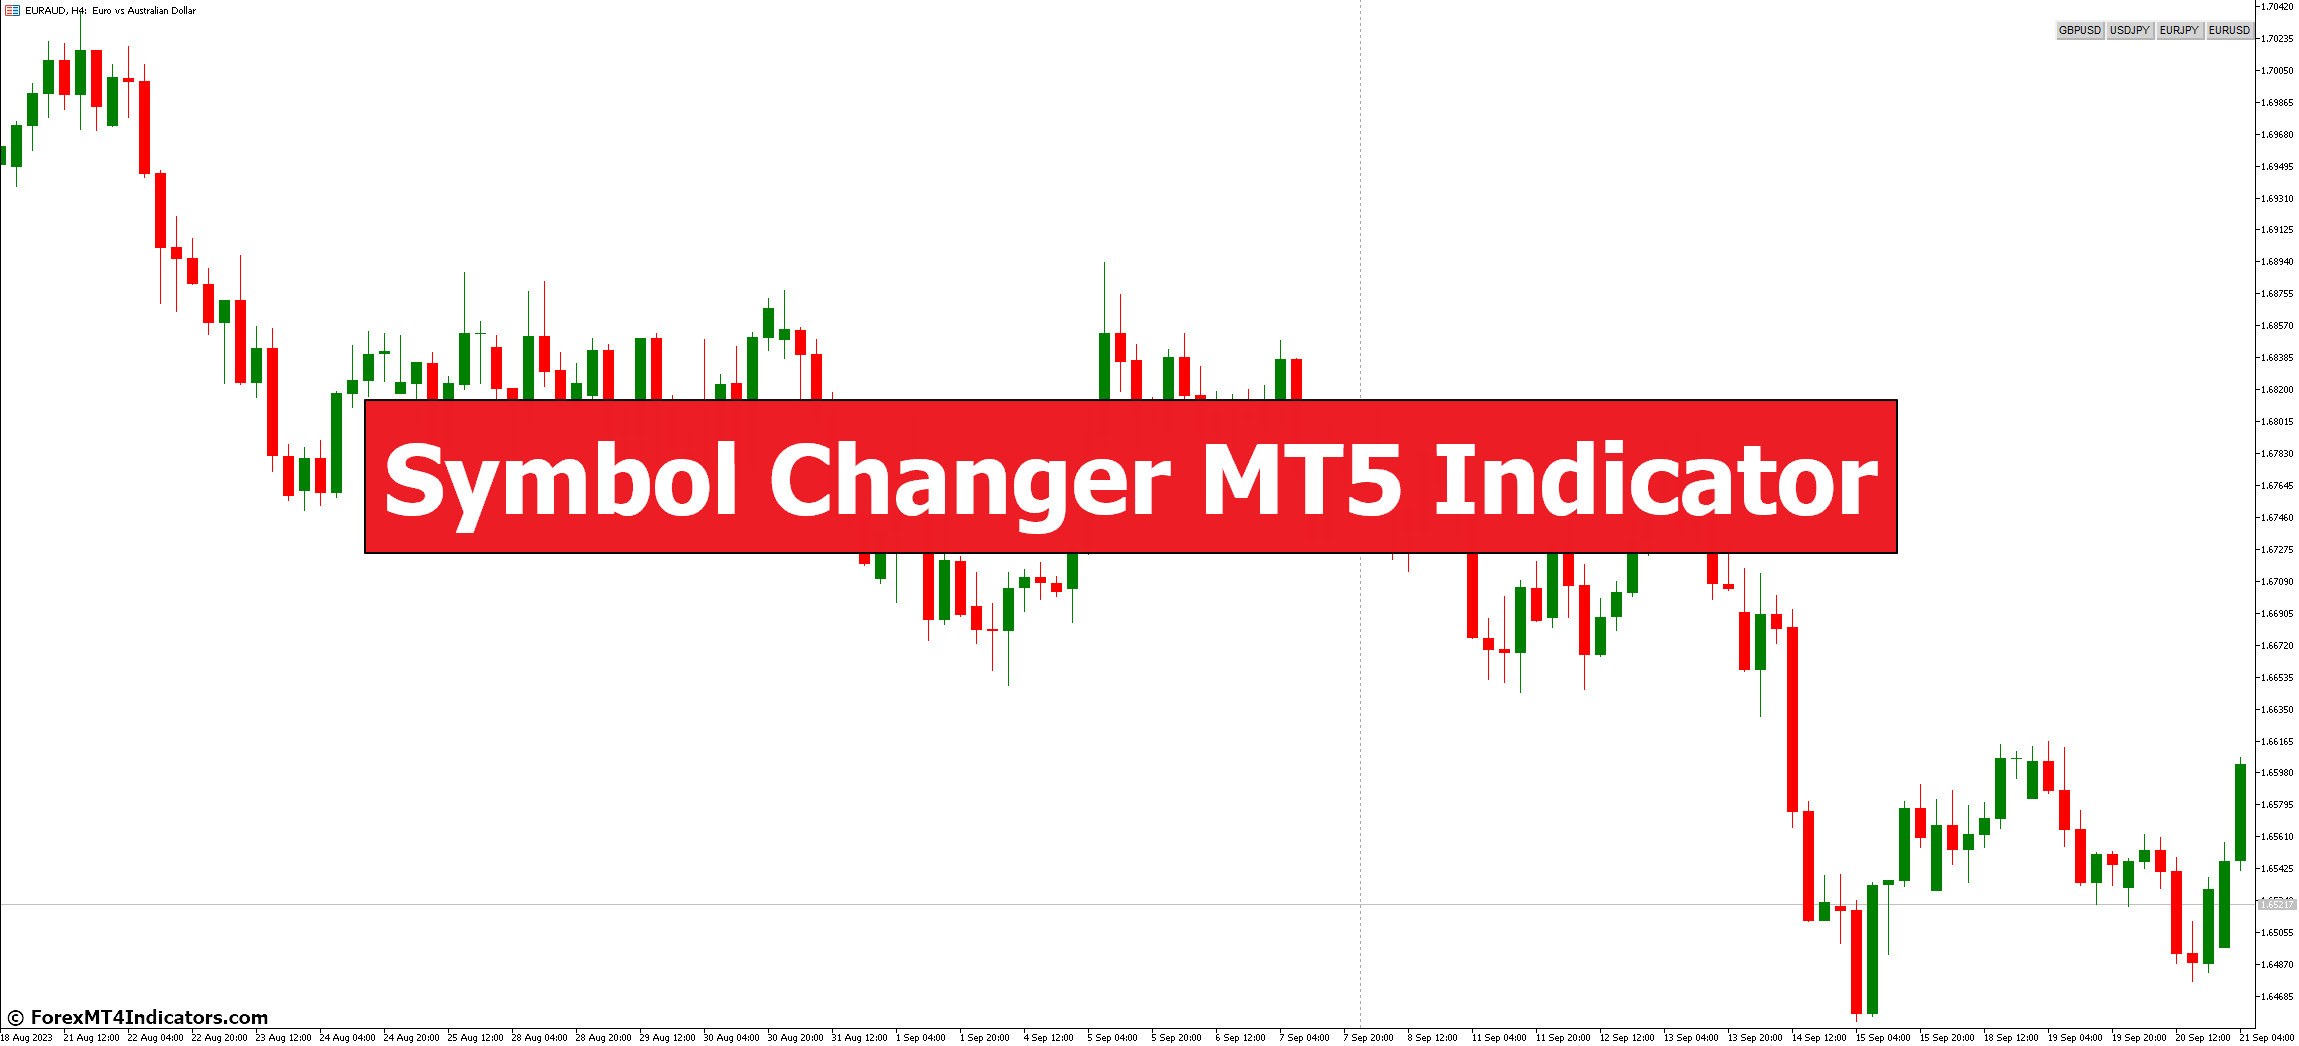 Symbol Changer MT5 Indicator